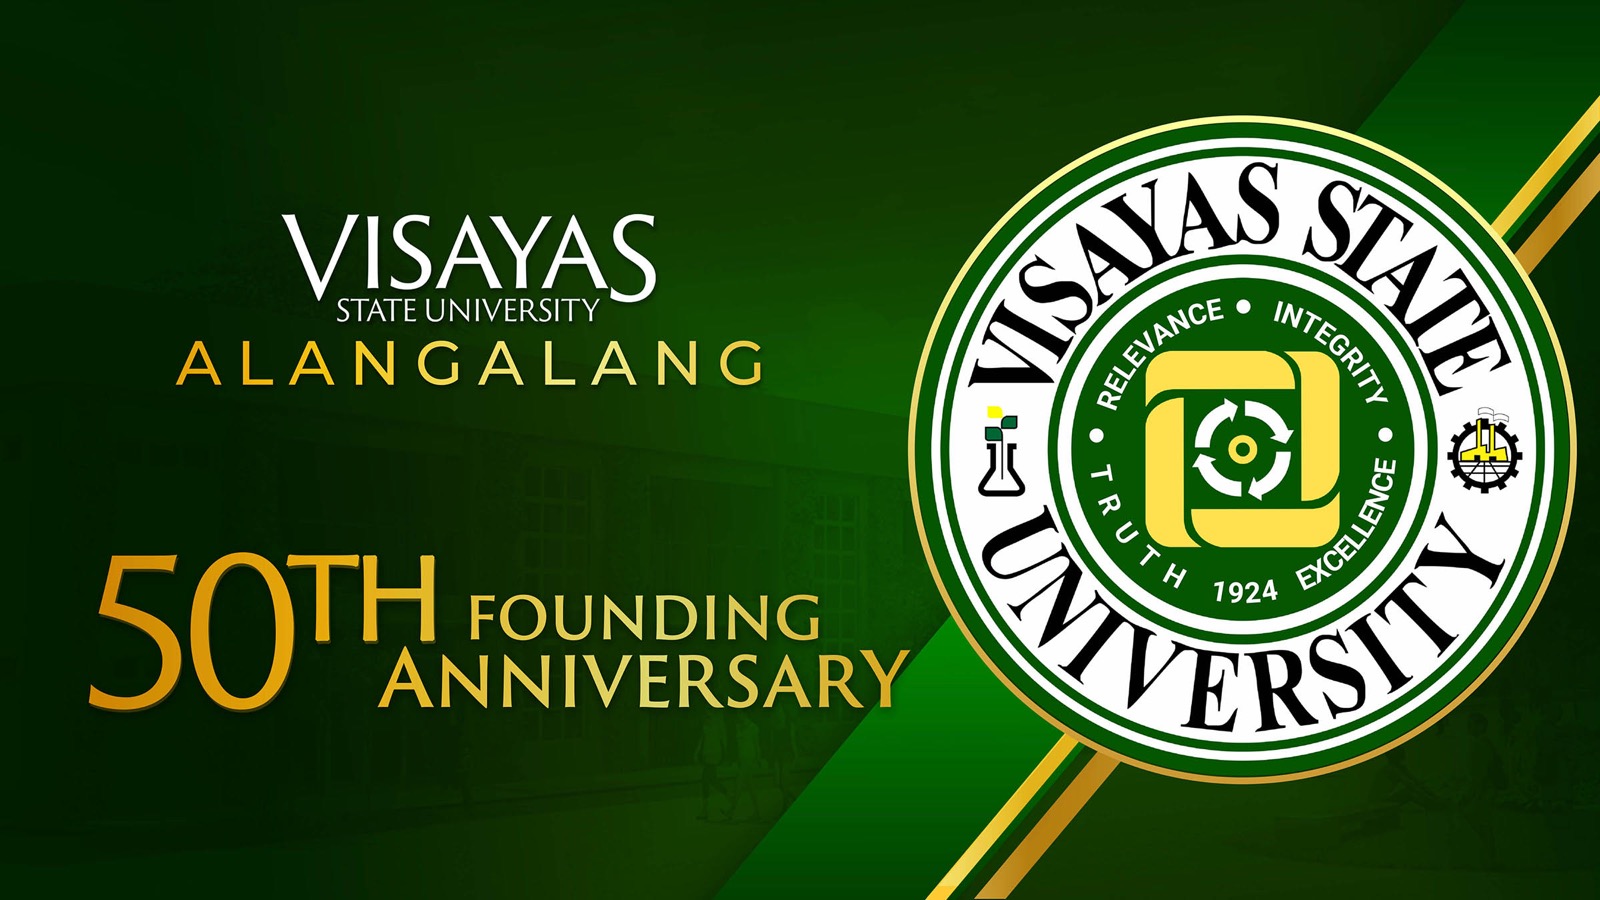 VSU Alangalang’s 50th Golden Anniversary